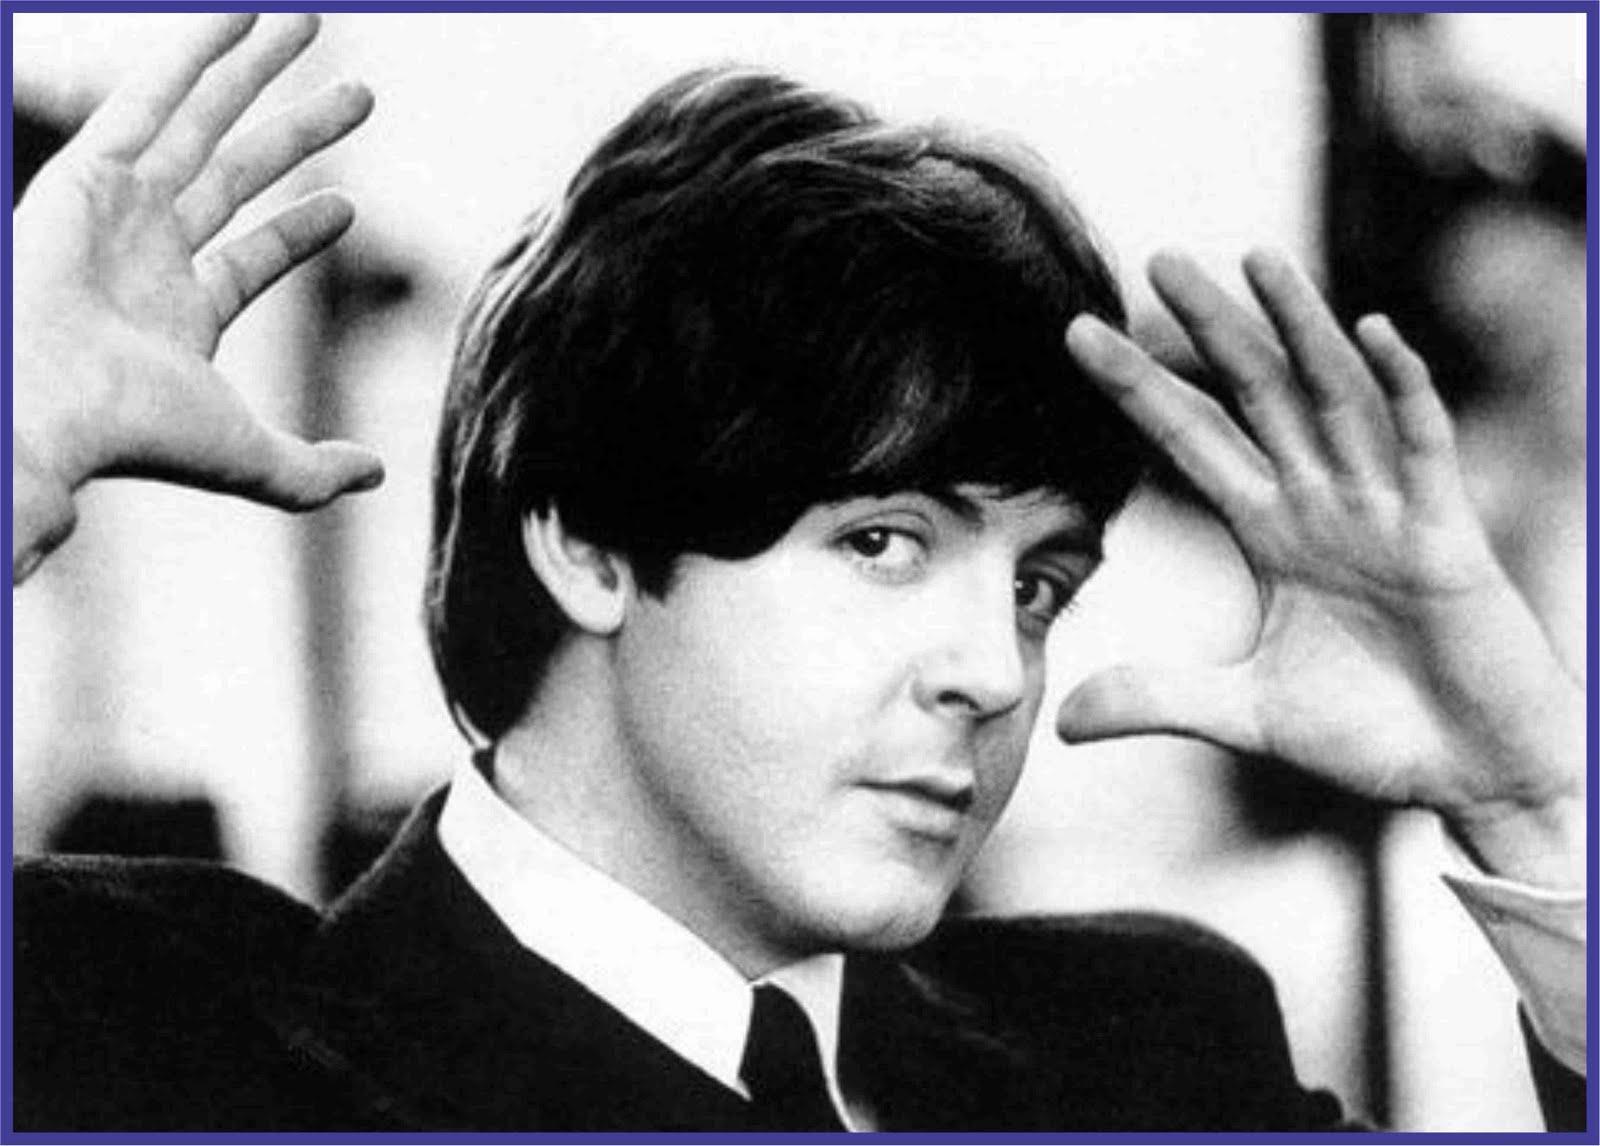 Paul McCartney Young Black white Wallpaper